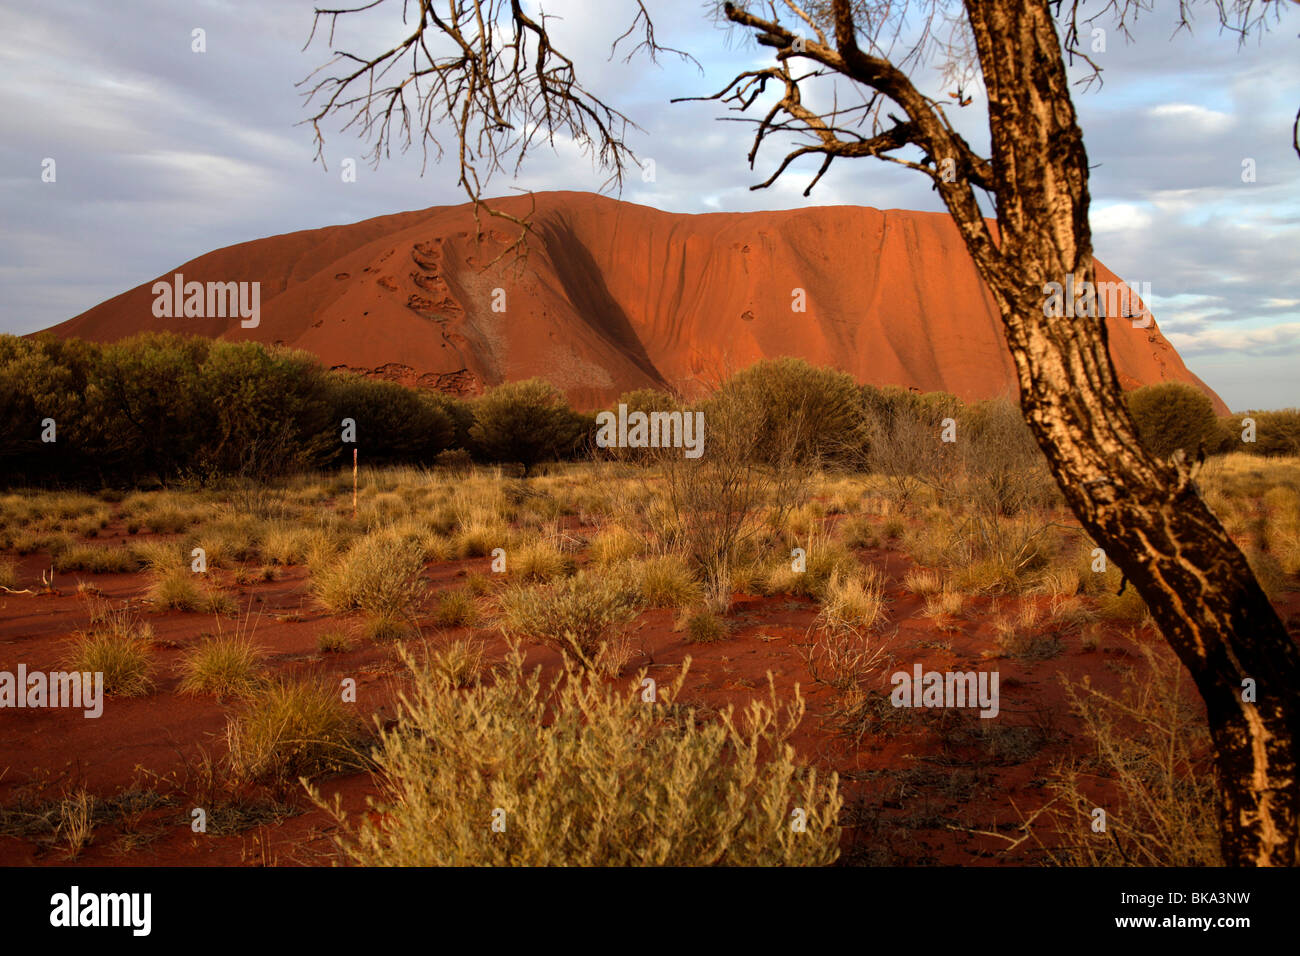 world-renowned sandstone formation Uluru or Ayers Rock , Northern Territory, Australia Stock Photo